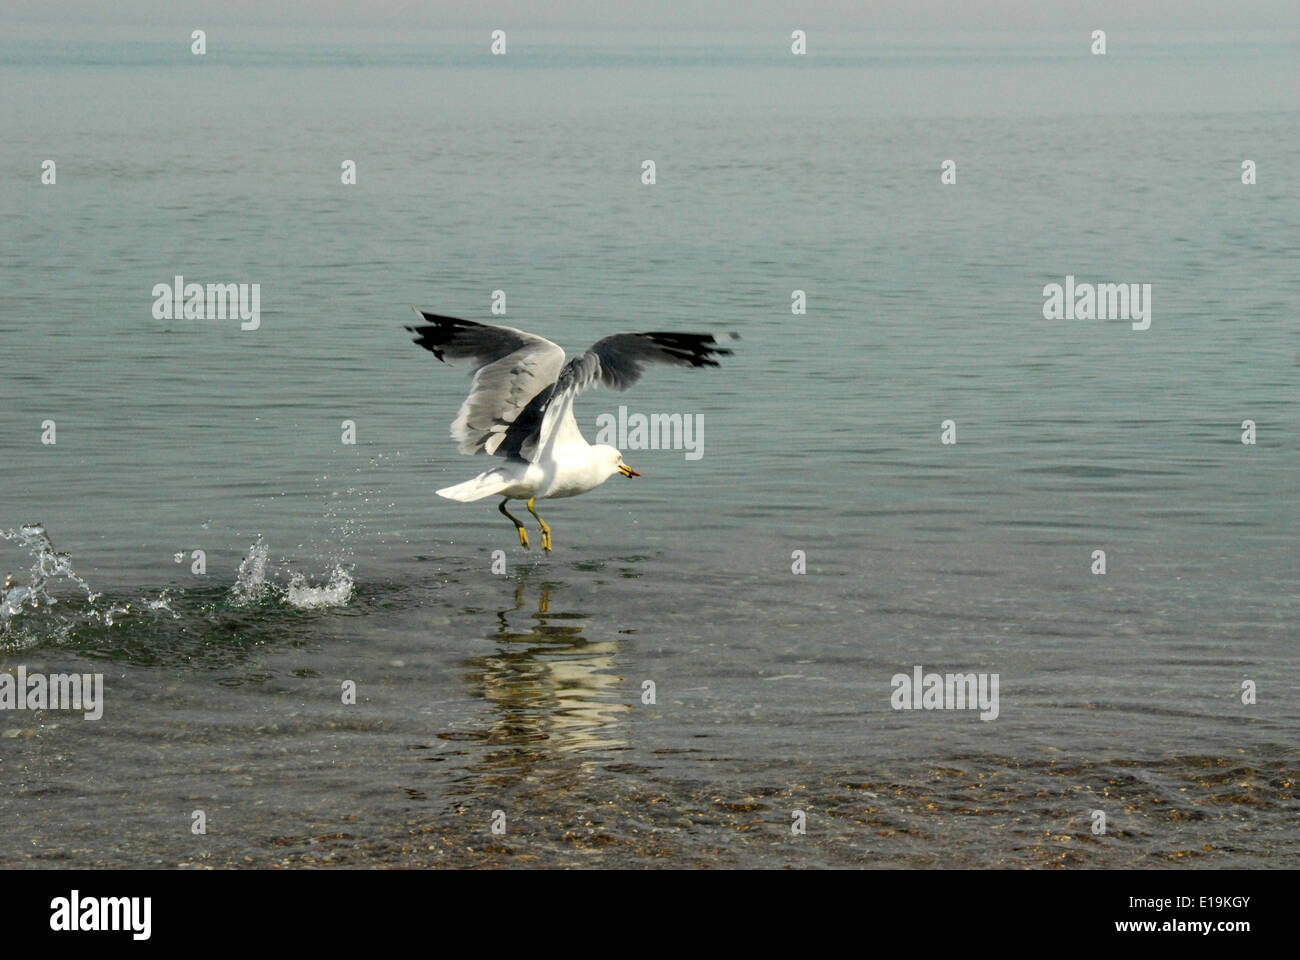 Ring-billed Gull skimming across the lake. Stock Photo